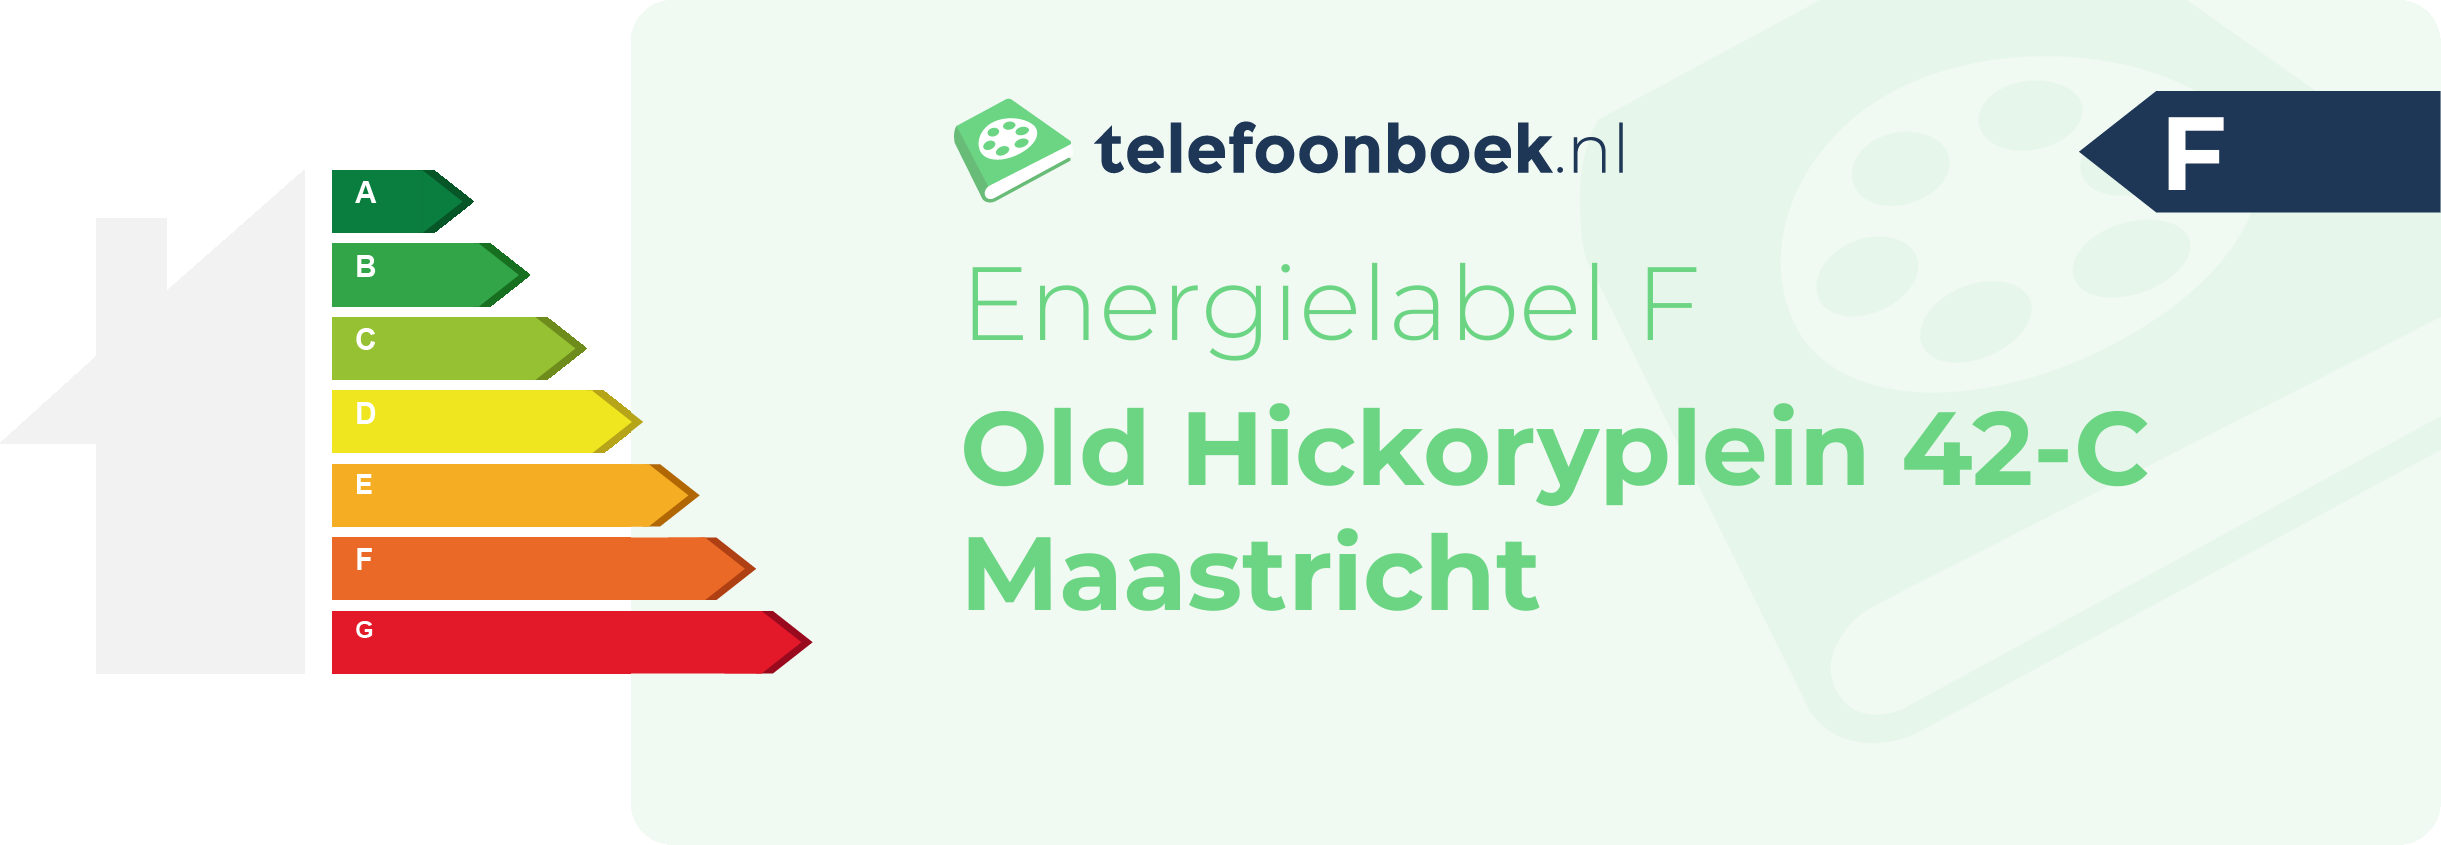 Energielabel Old Hickoryplein 42-C Maastricht